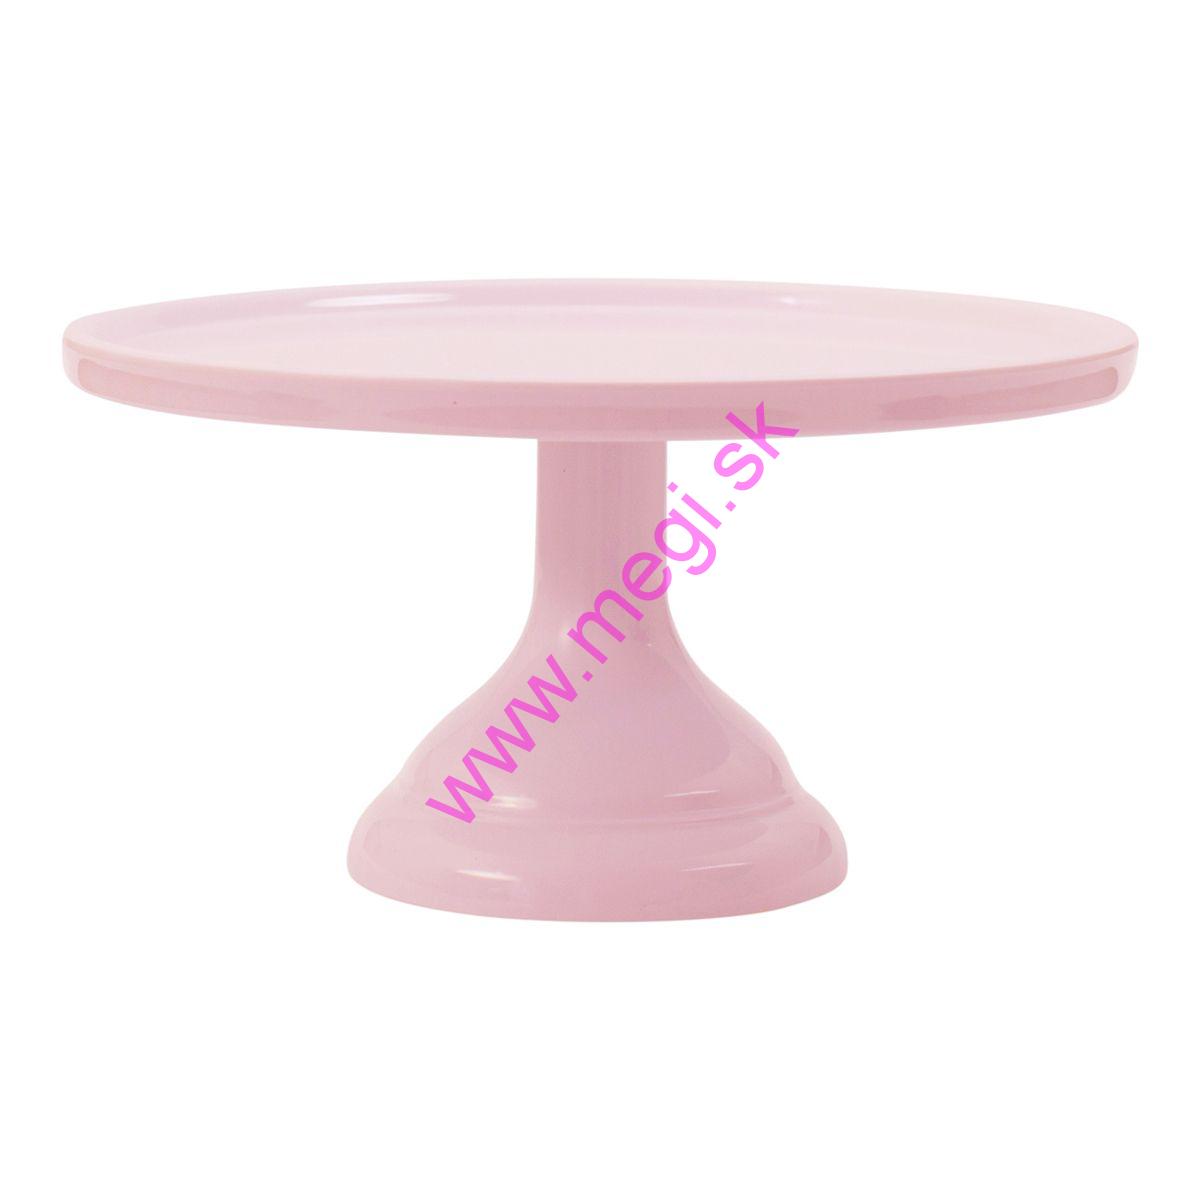 Stojan na tortu malý ružový, O 23,5 x 12 cm, LLC07, ALLC Taart Standaard